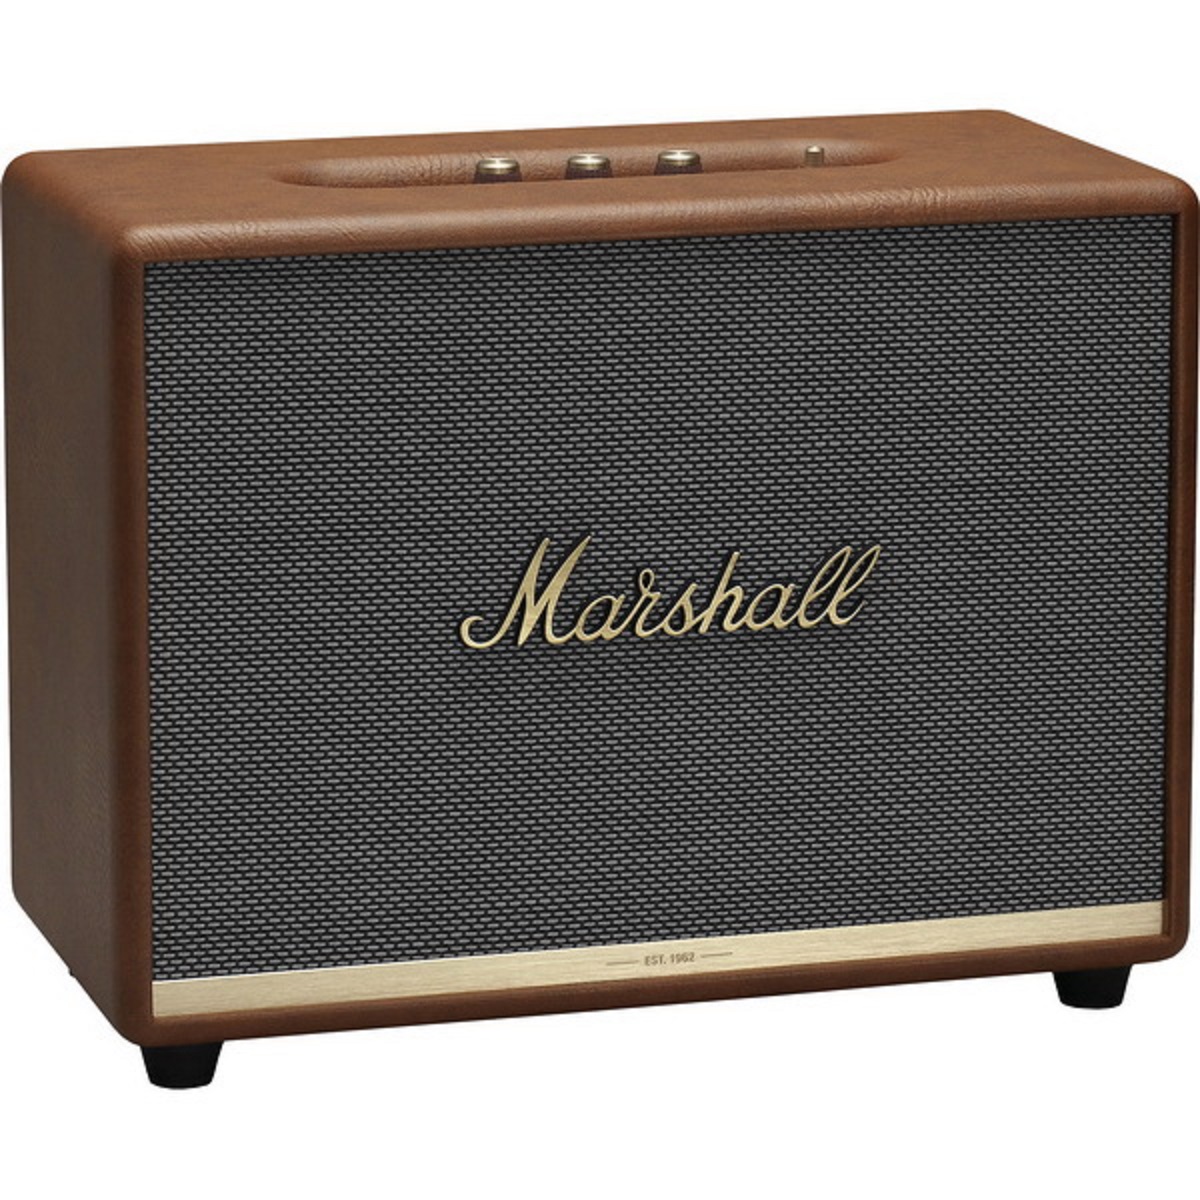 Buy MARSHALL Bluetooth Speaker (130 W, Brown) Woburn II at Best price